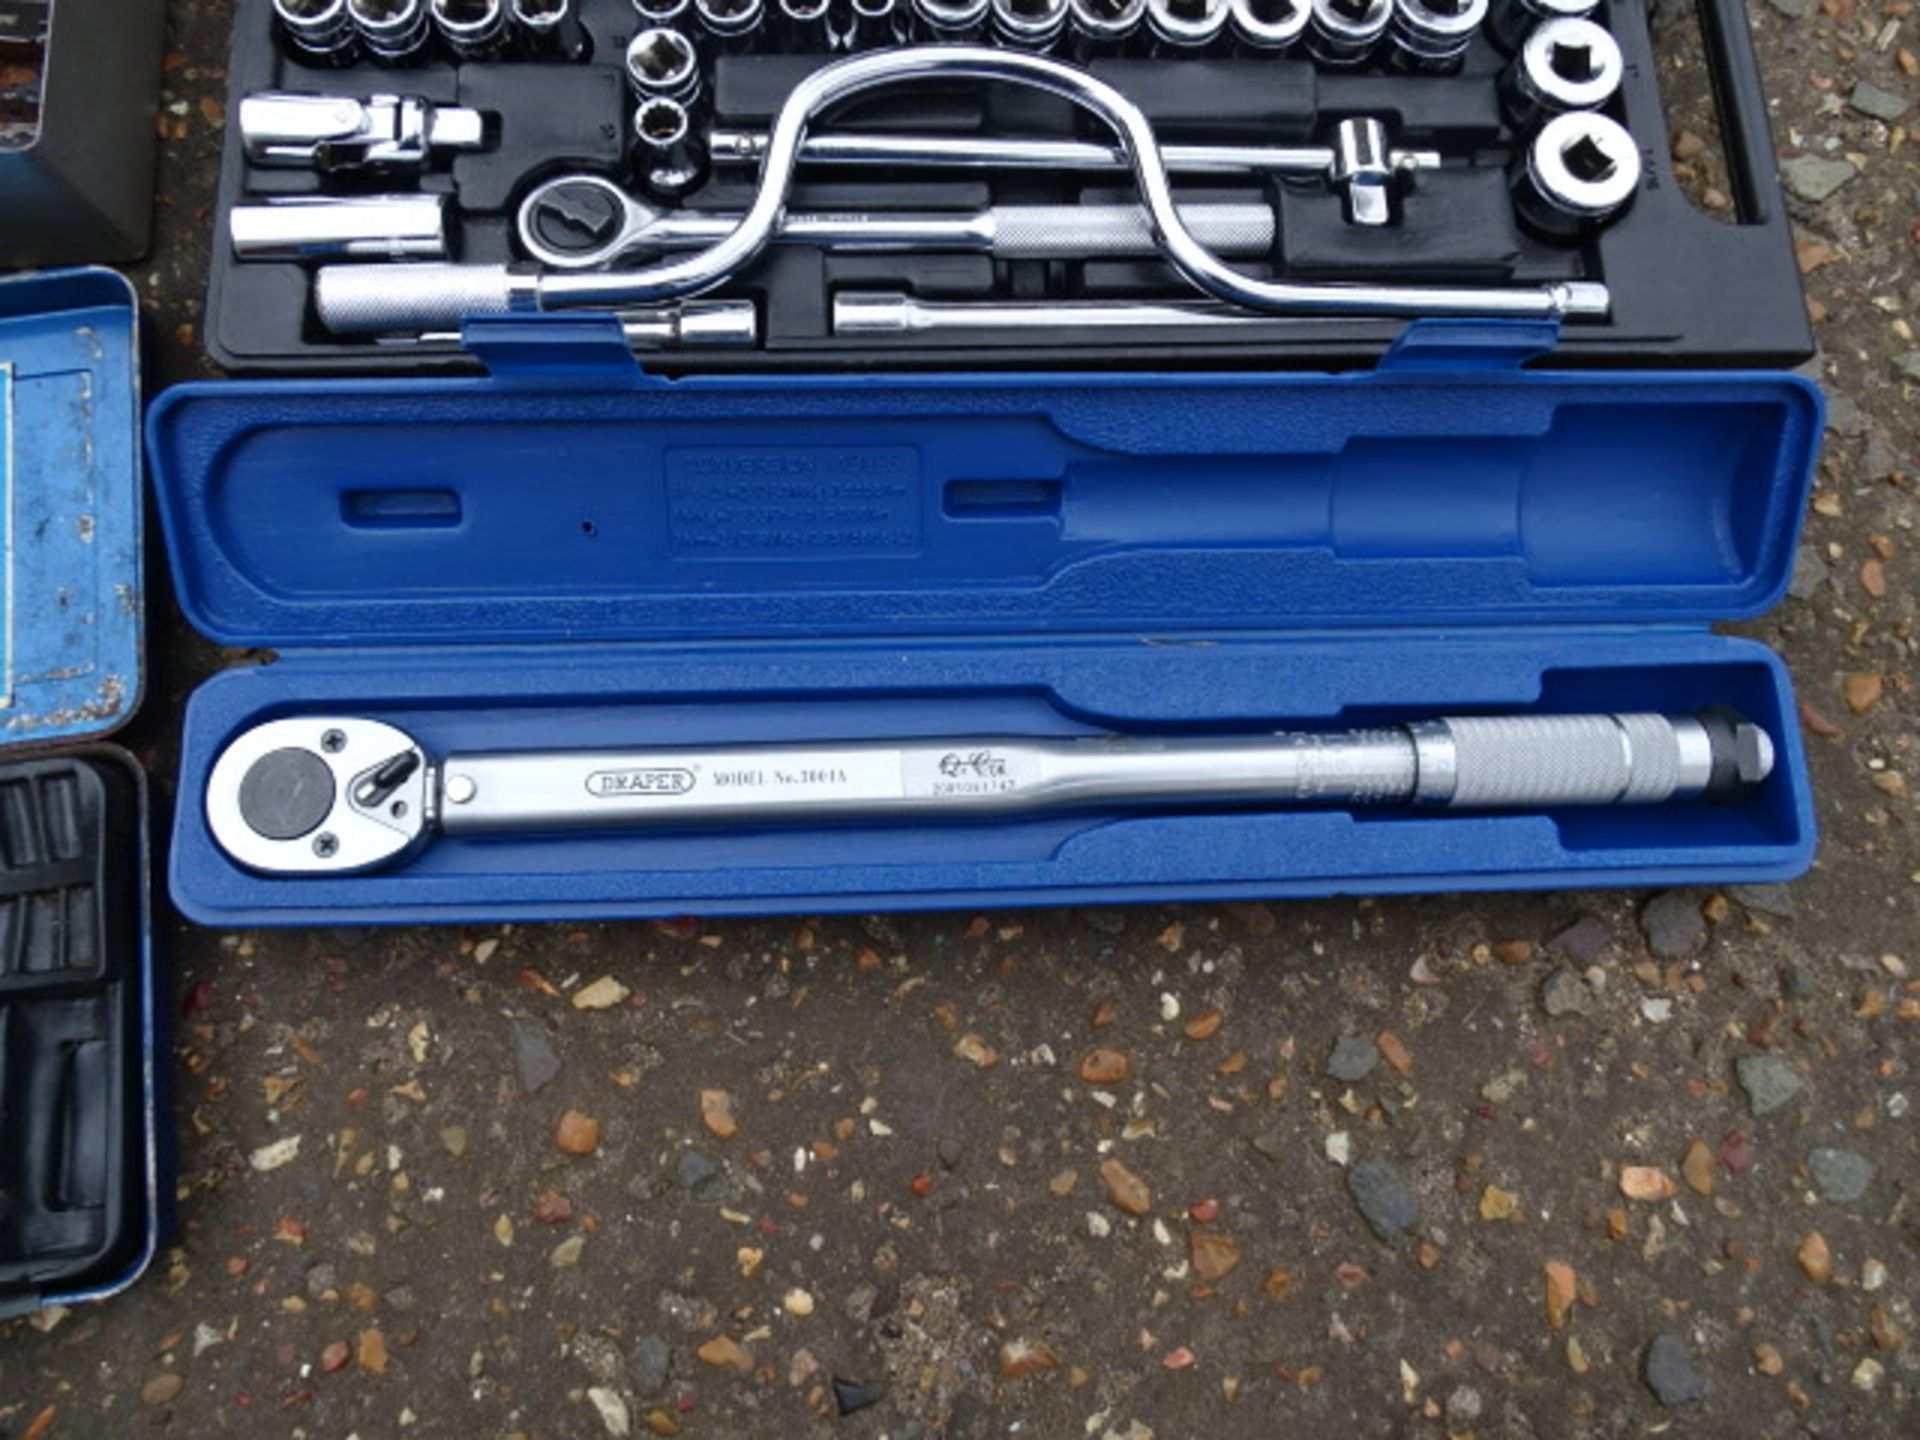 Kamasa Tools socket set and Draper torque wrench etc - Image 7 of 11